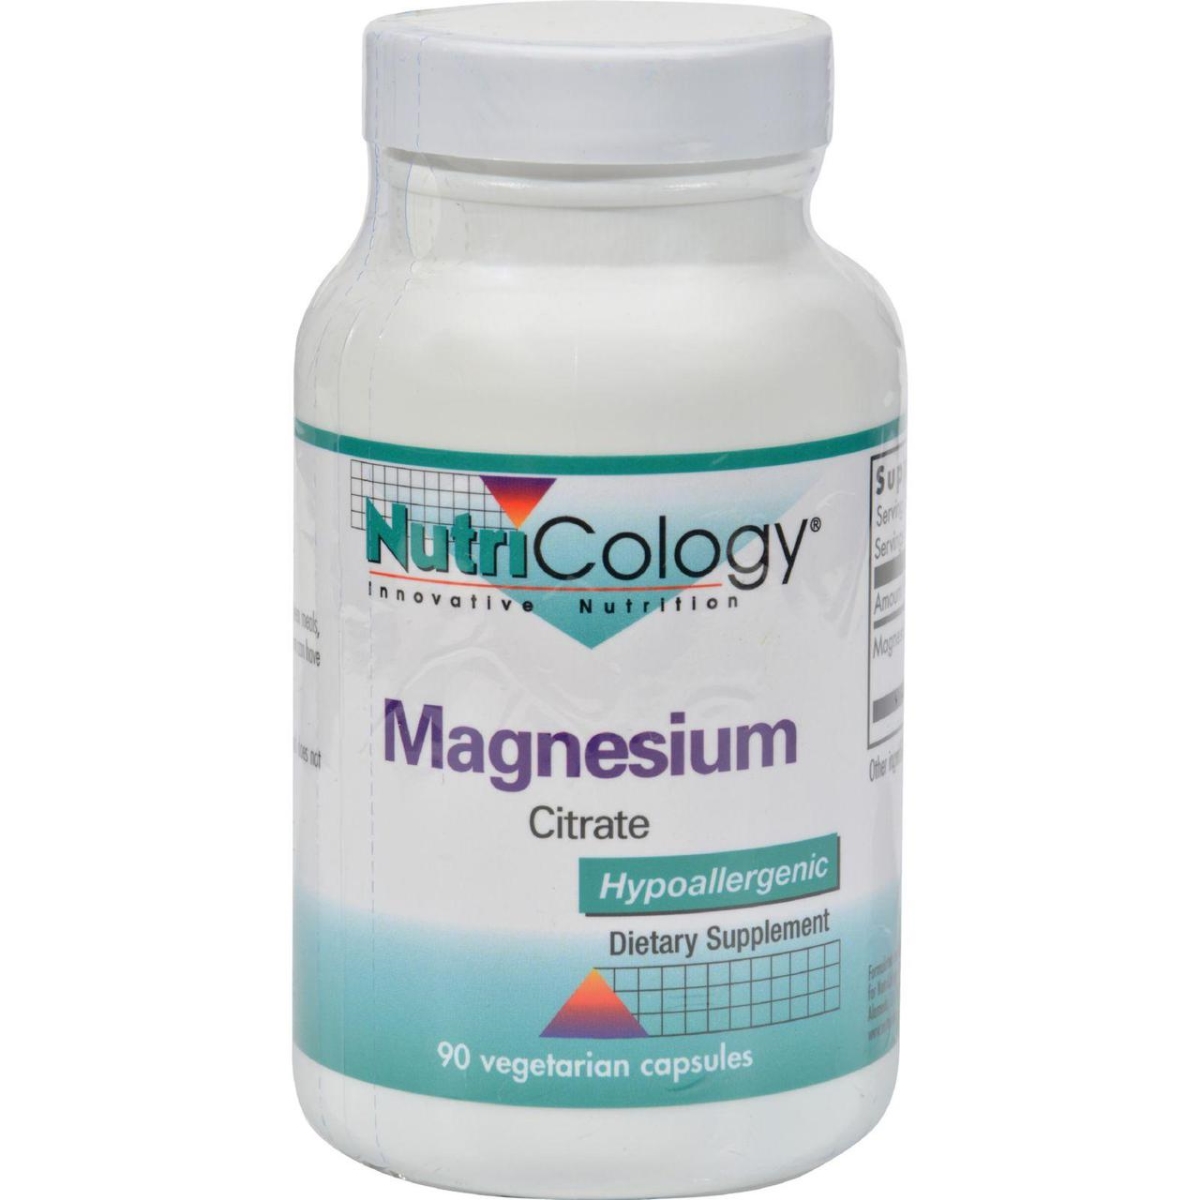 Hg0524751 170 Mg Magnesium Citrate - 90 Capsules